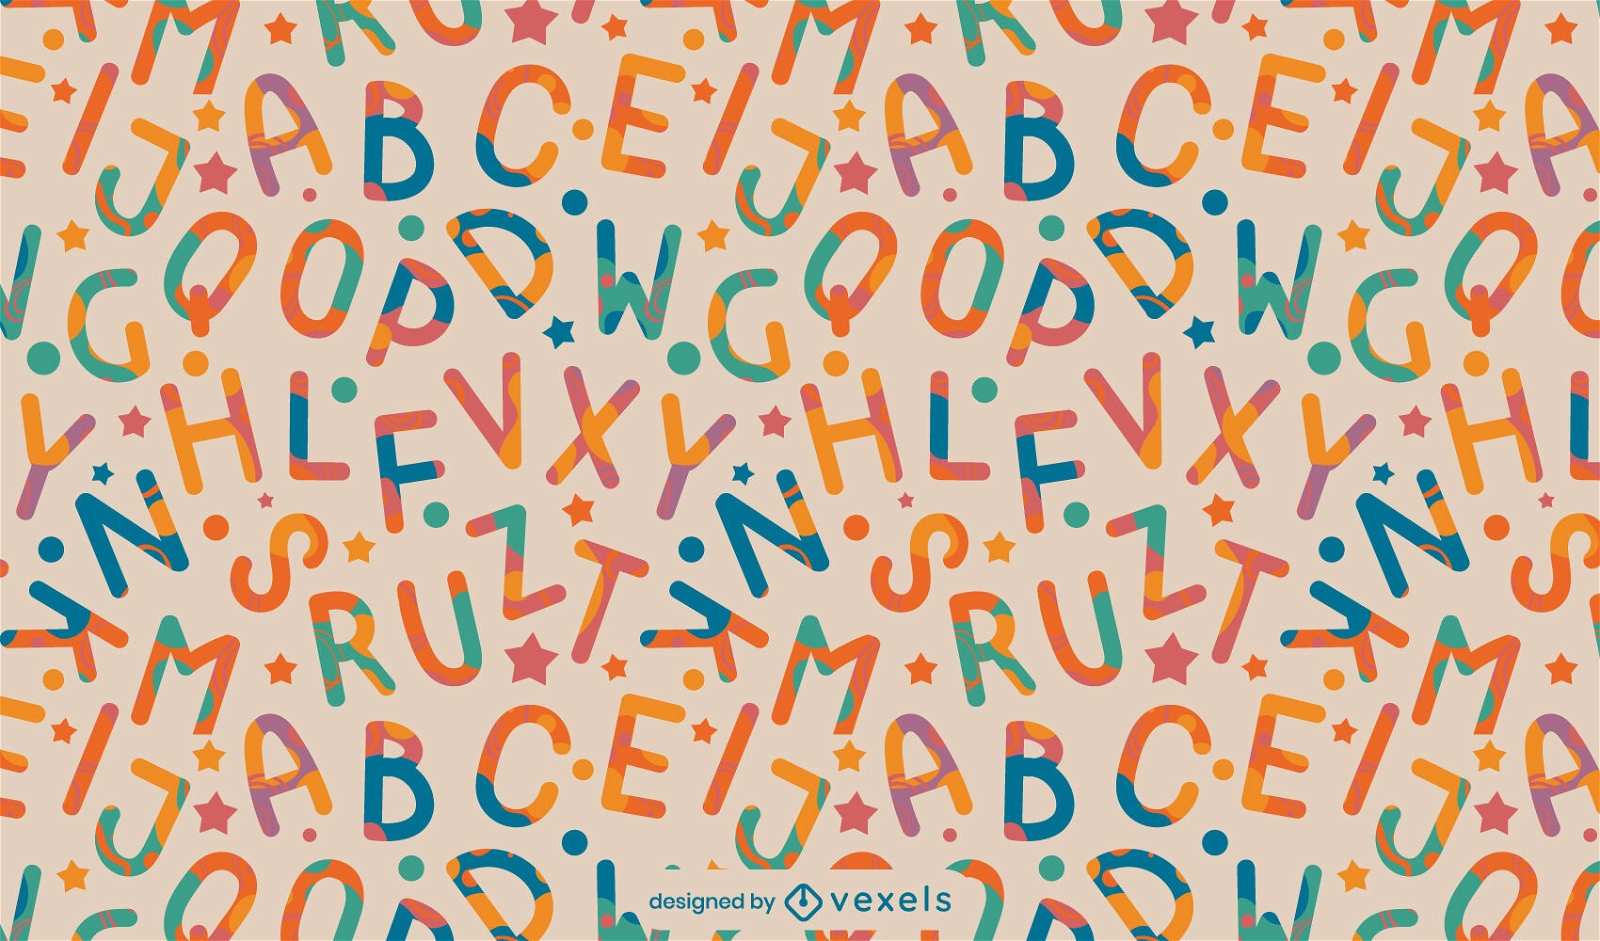 Colorful alphabet letters pattern design